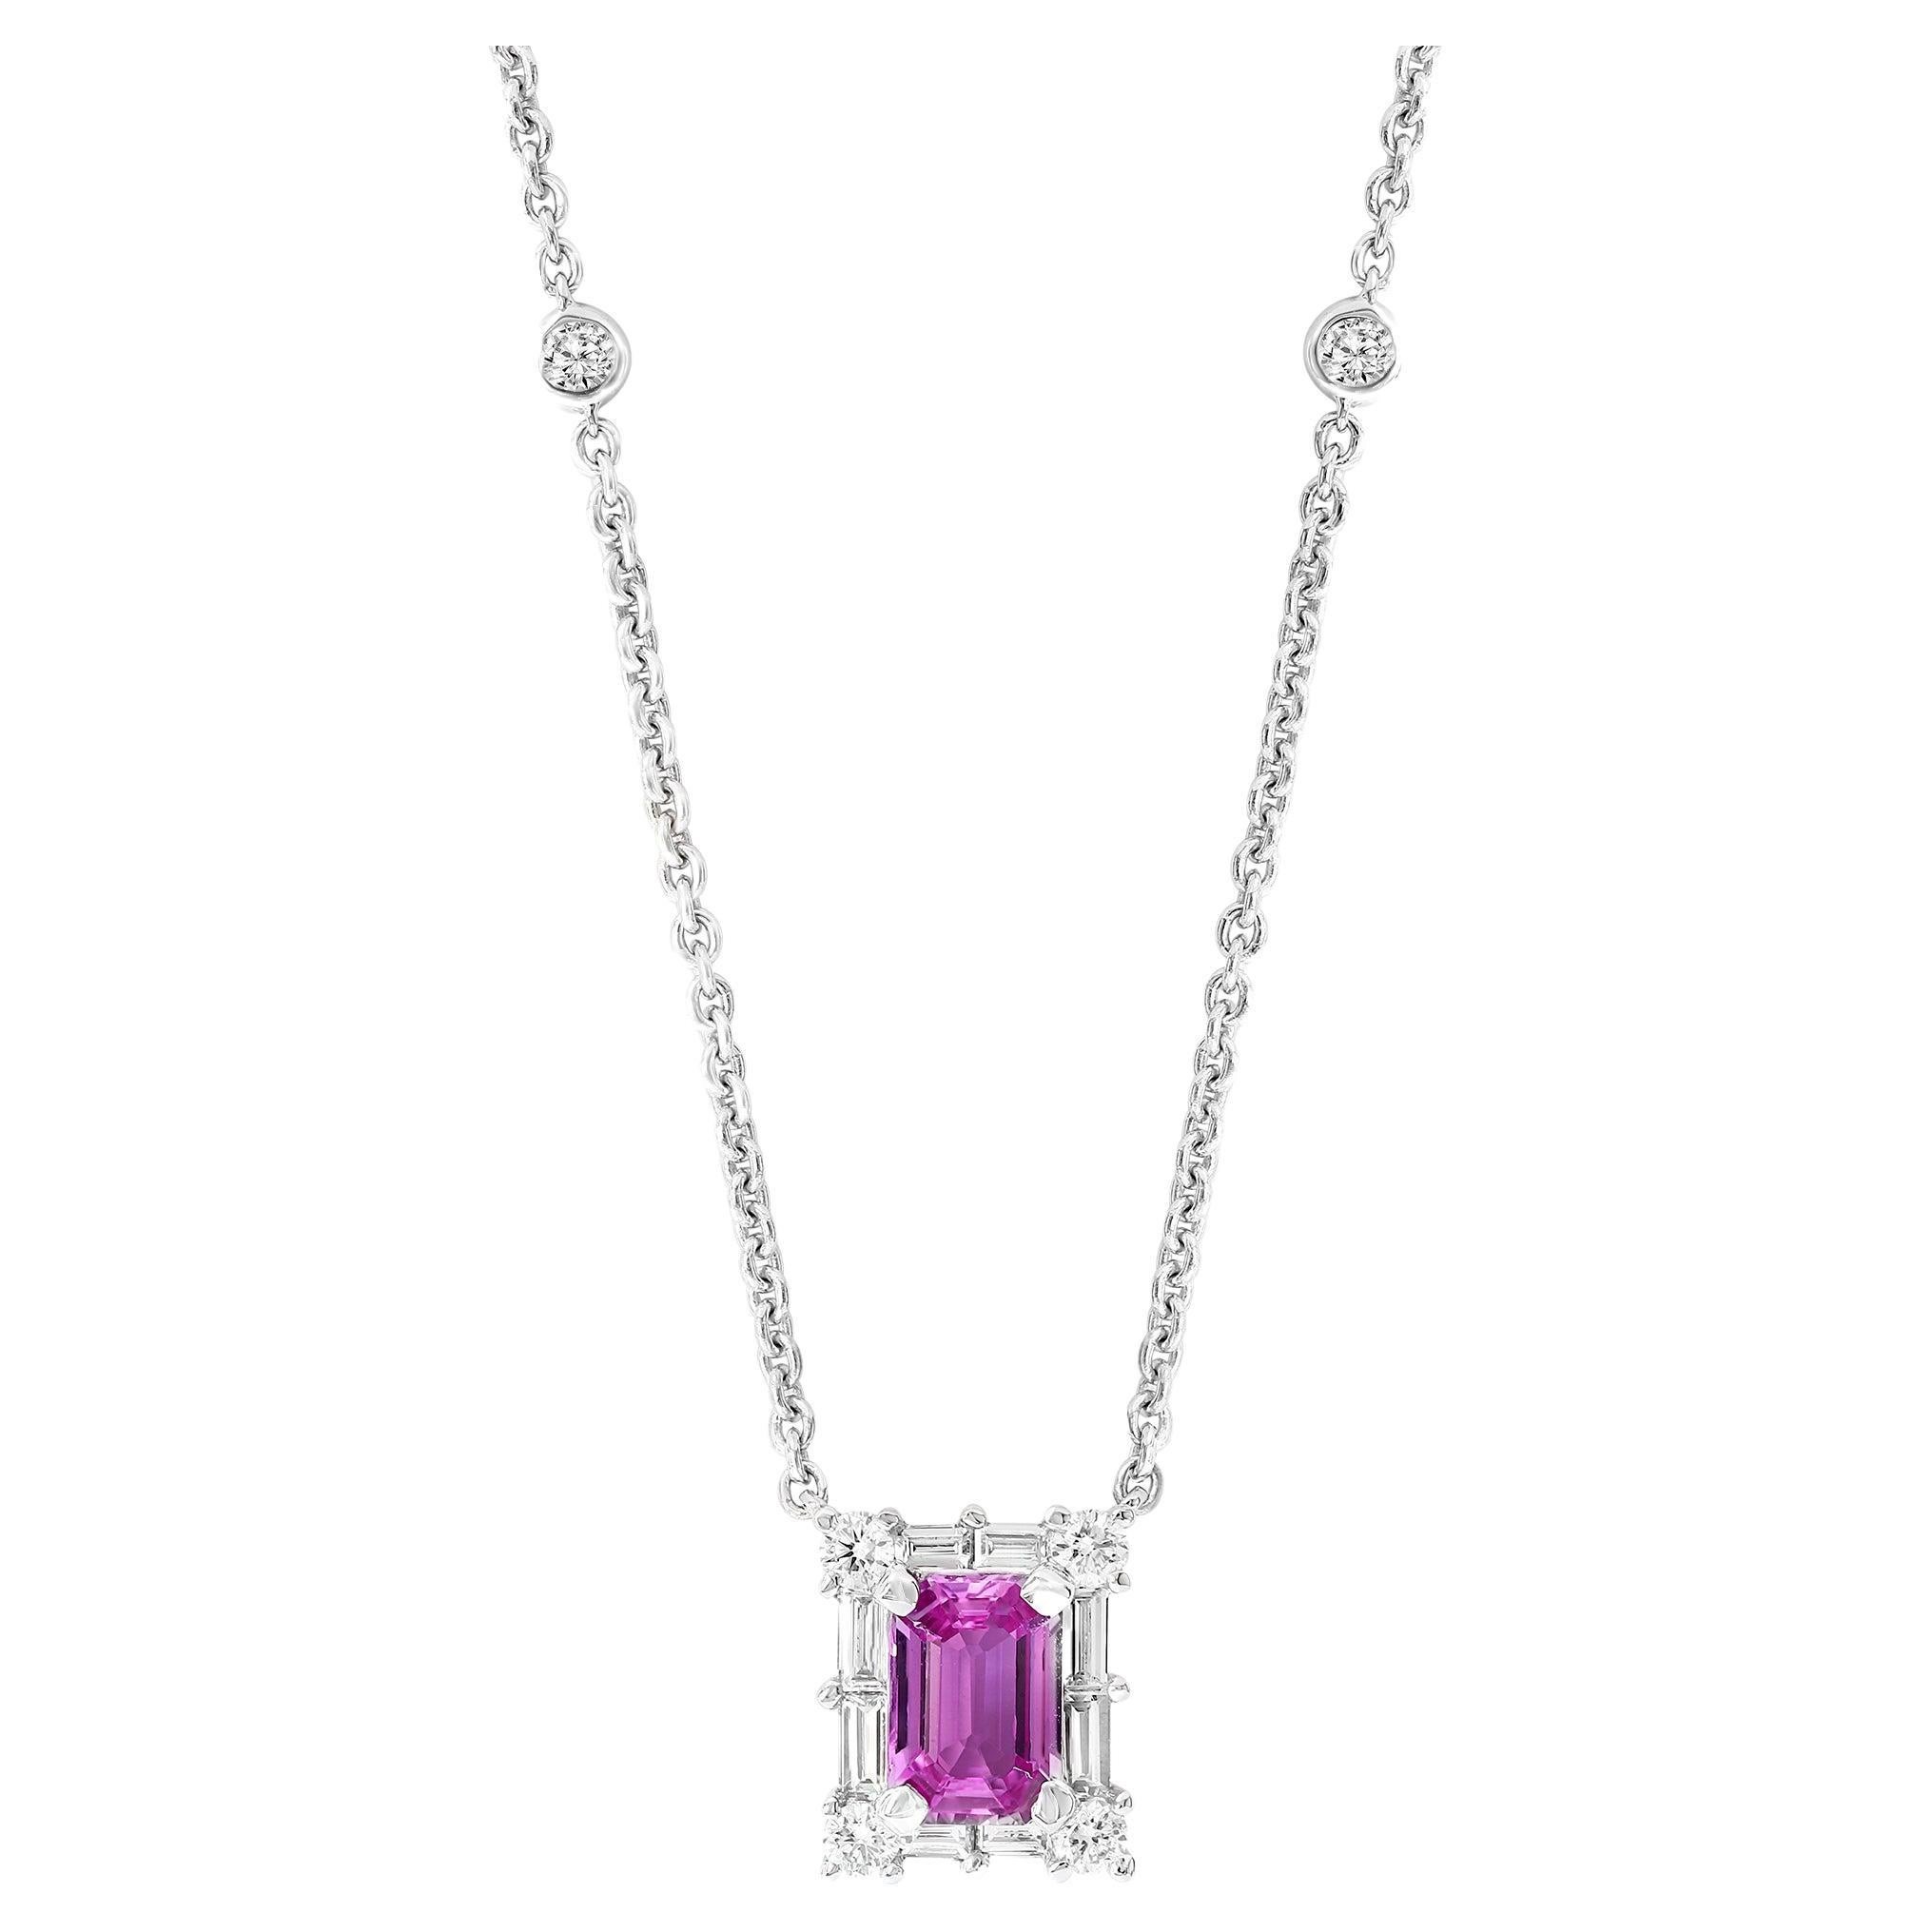 0.96 Carat Emerald Cut Pink Sapphire Diamond Pendant Necklace in 18K White Gold